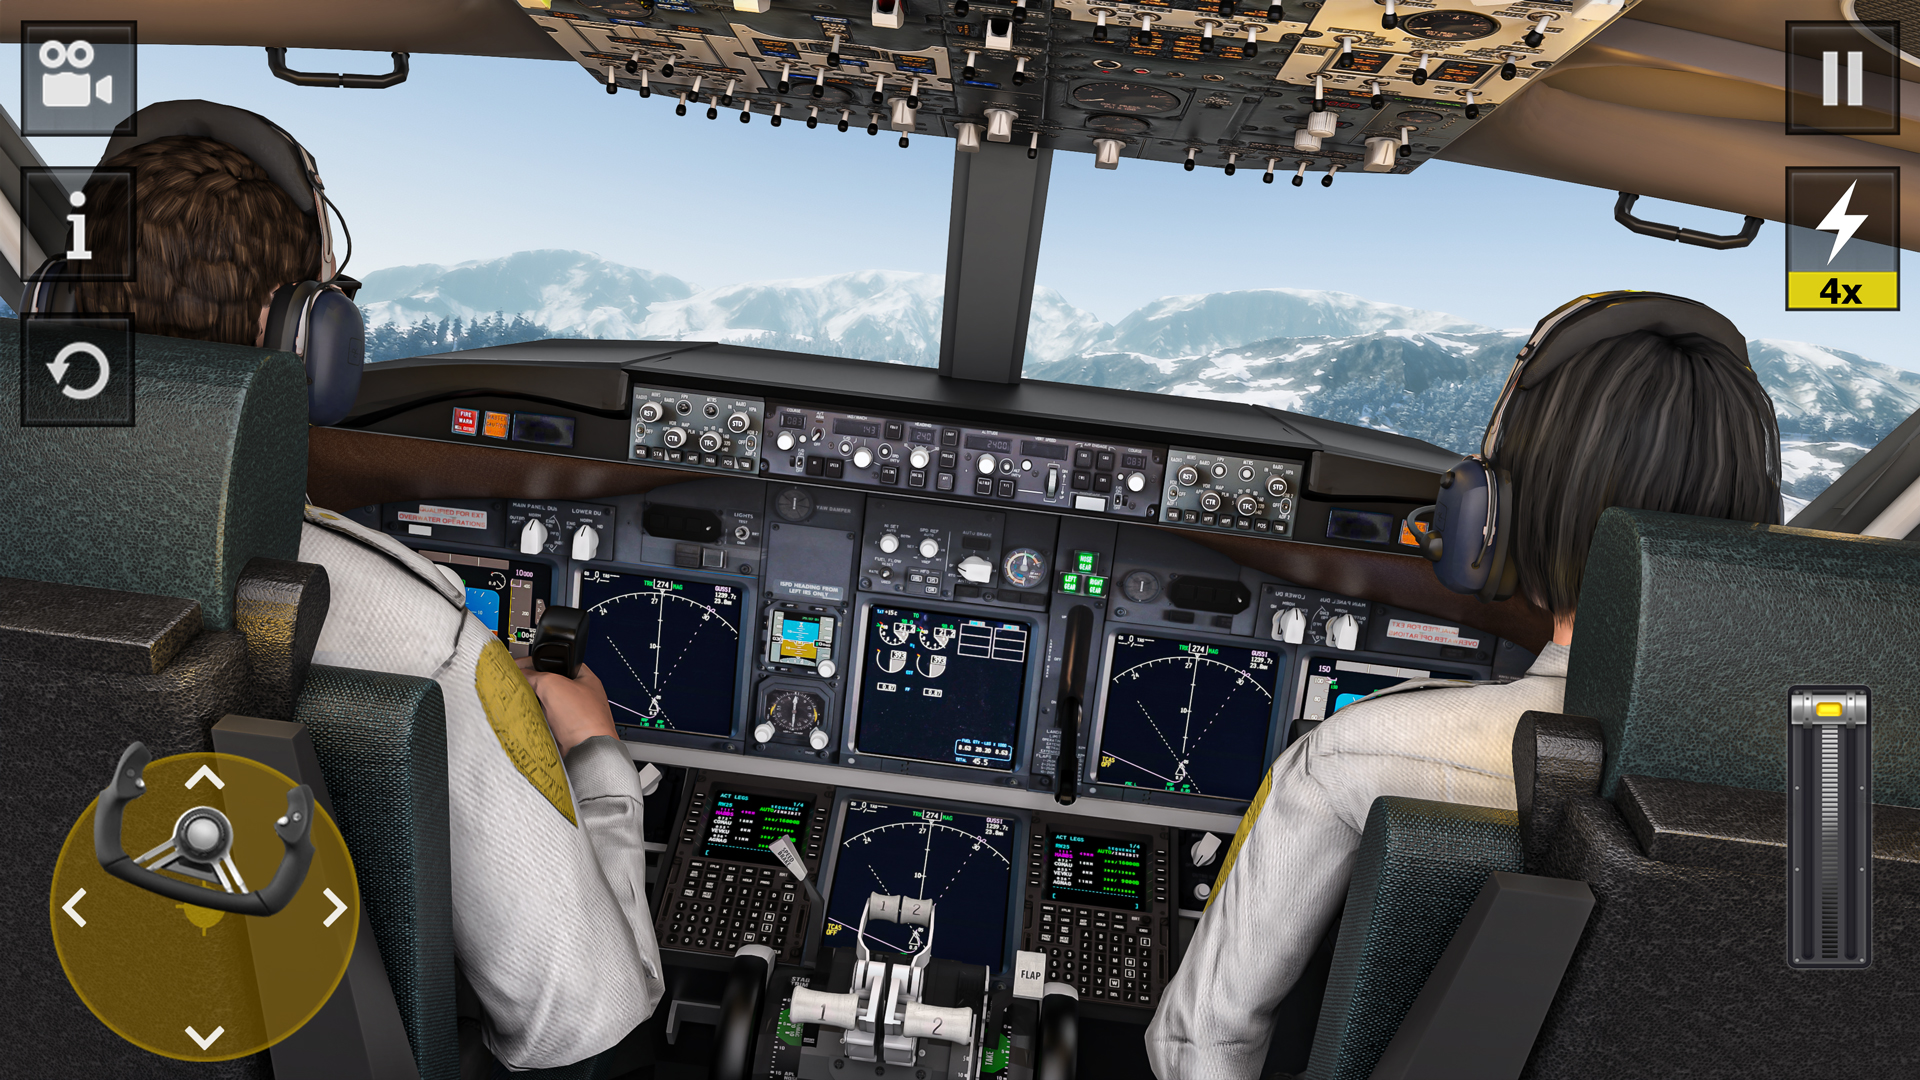 Real Jet Airplane Flight Simulator Plane Flying Apk Download for Android-  Latest version 1.2.20- com.valley.flight.pilot.simulator.flyplane